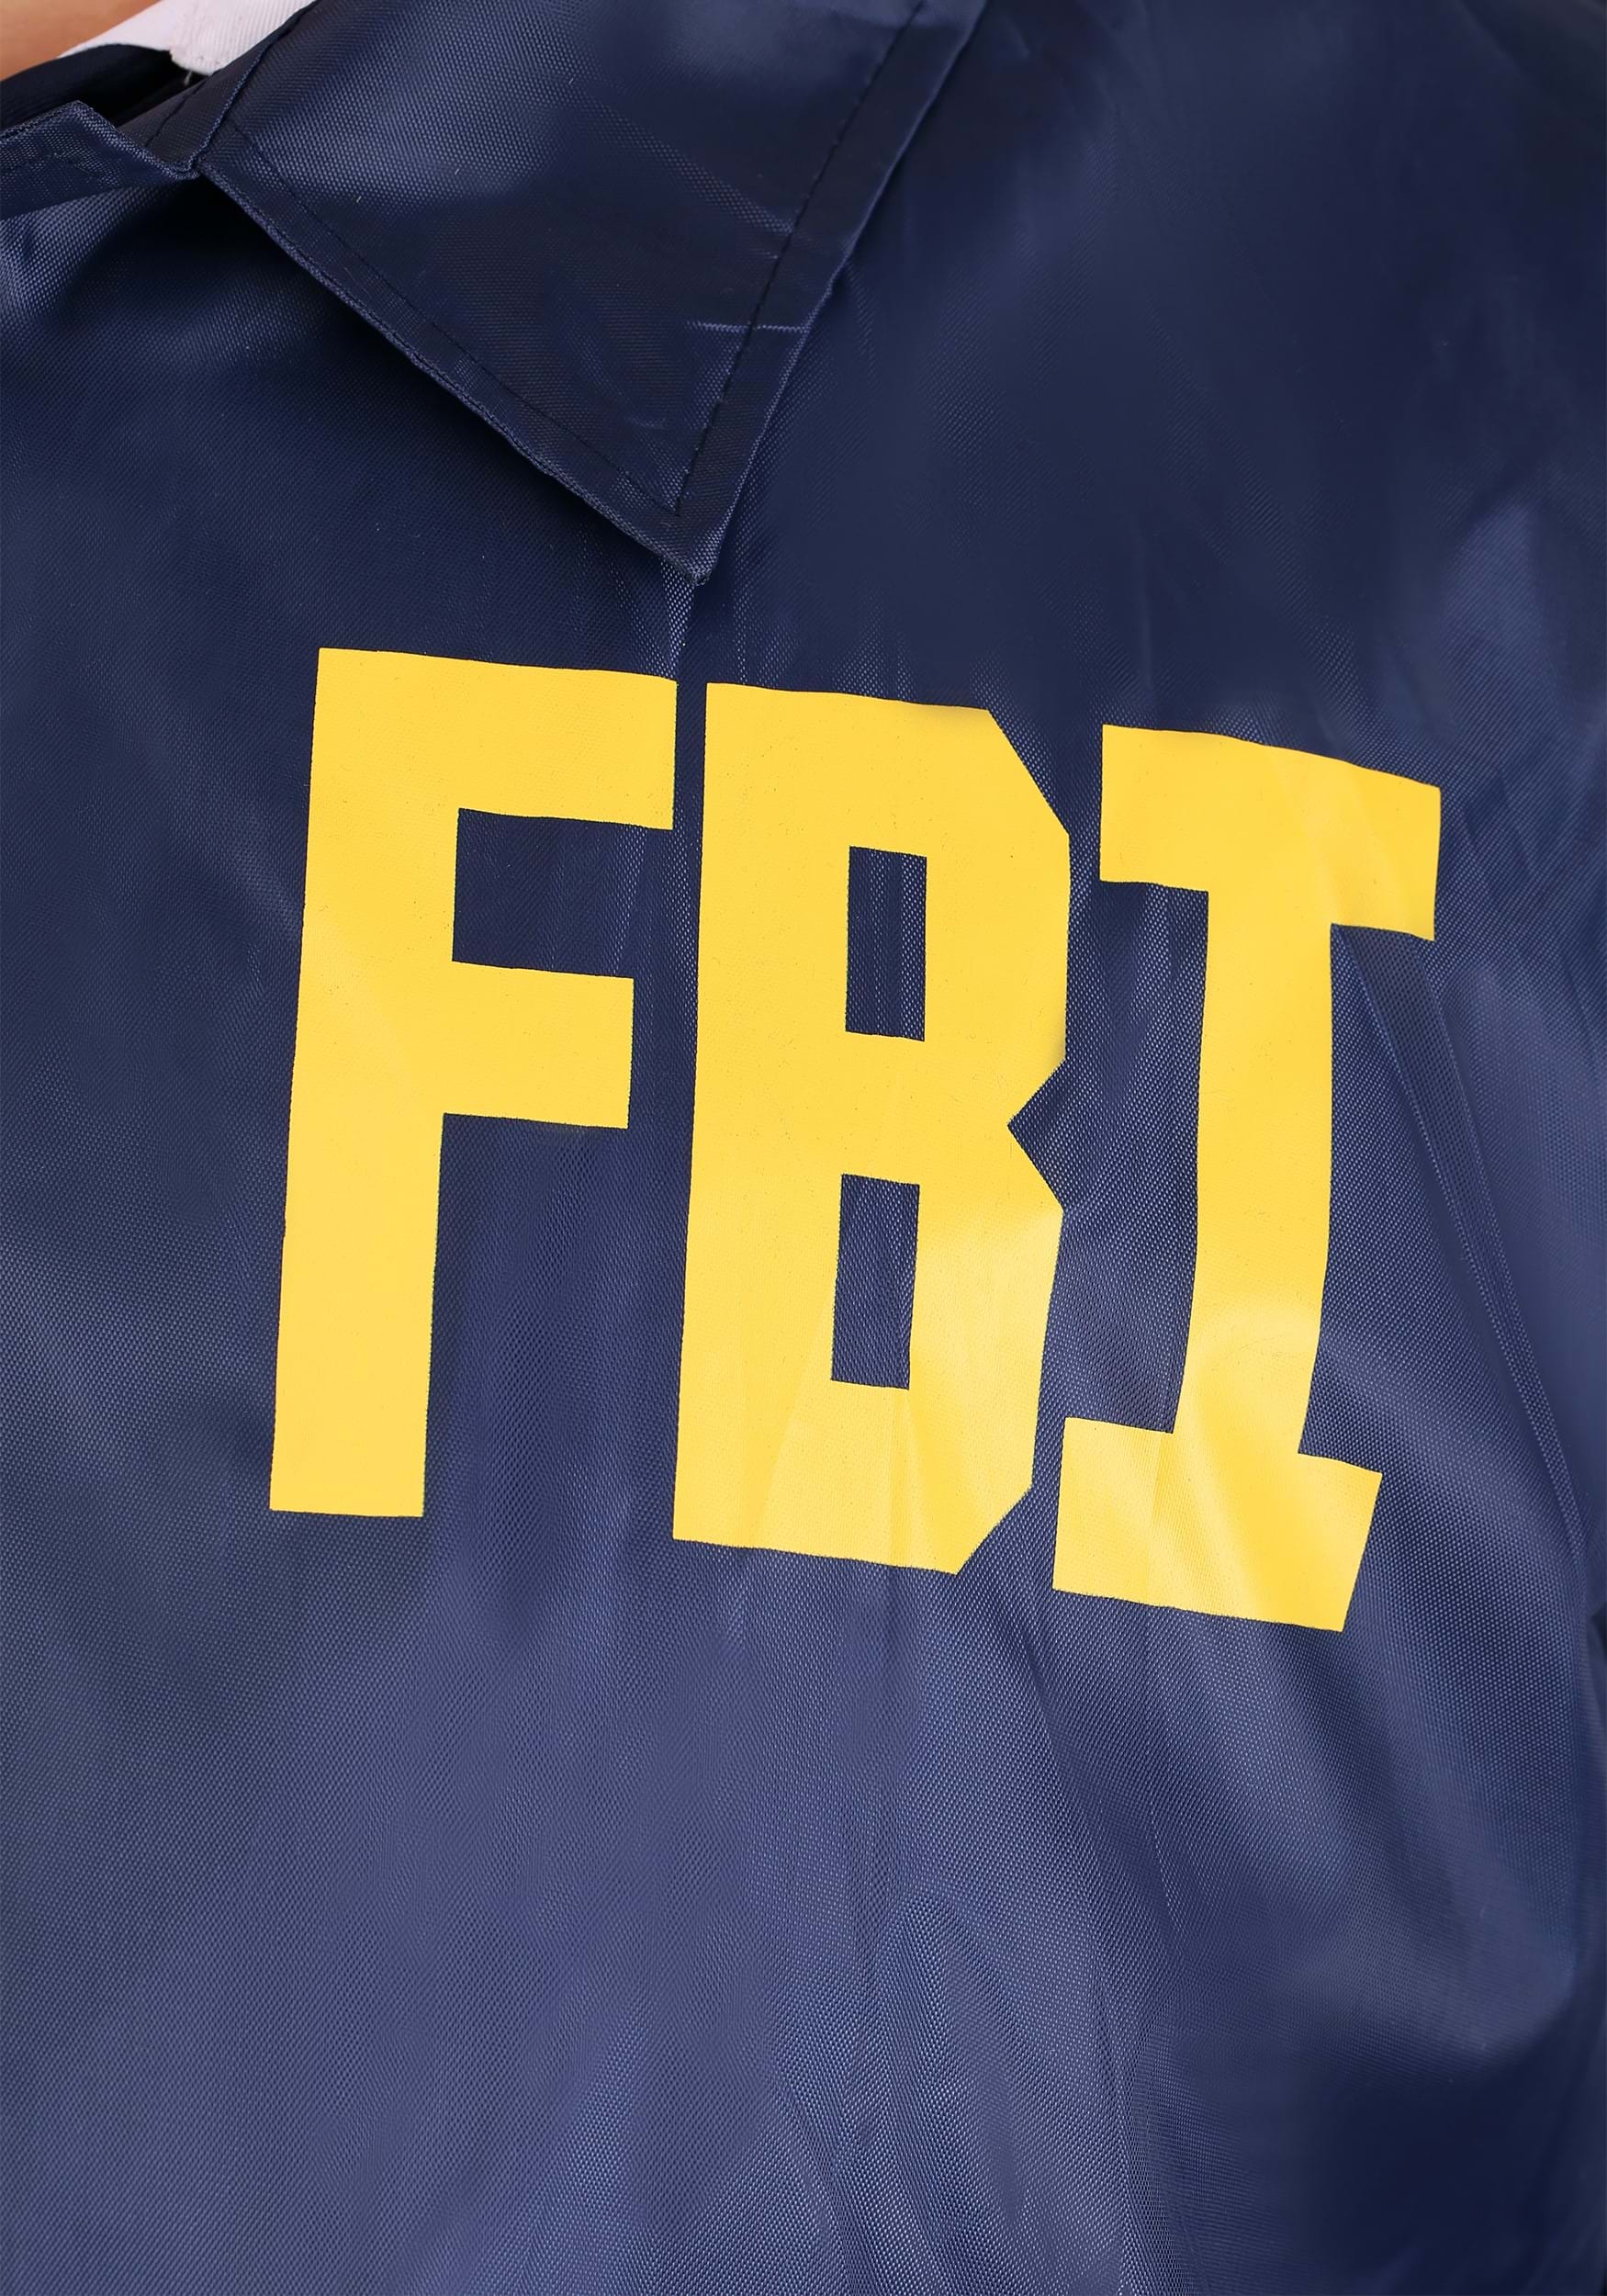 Plus Size FBI Adult Fancy Dress Costume Jacket